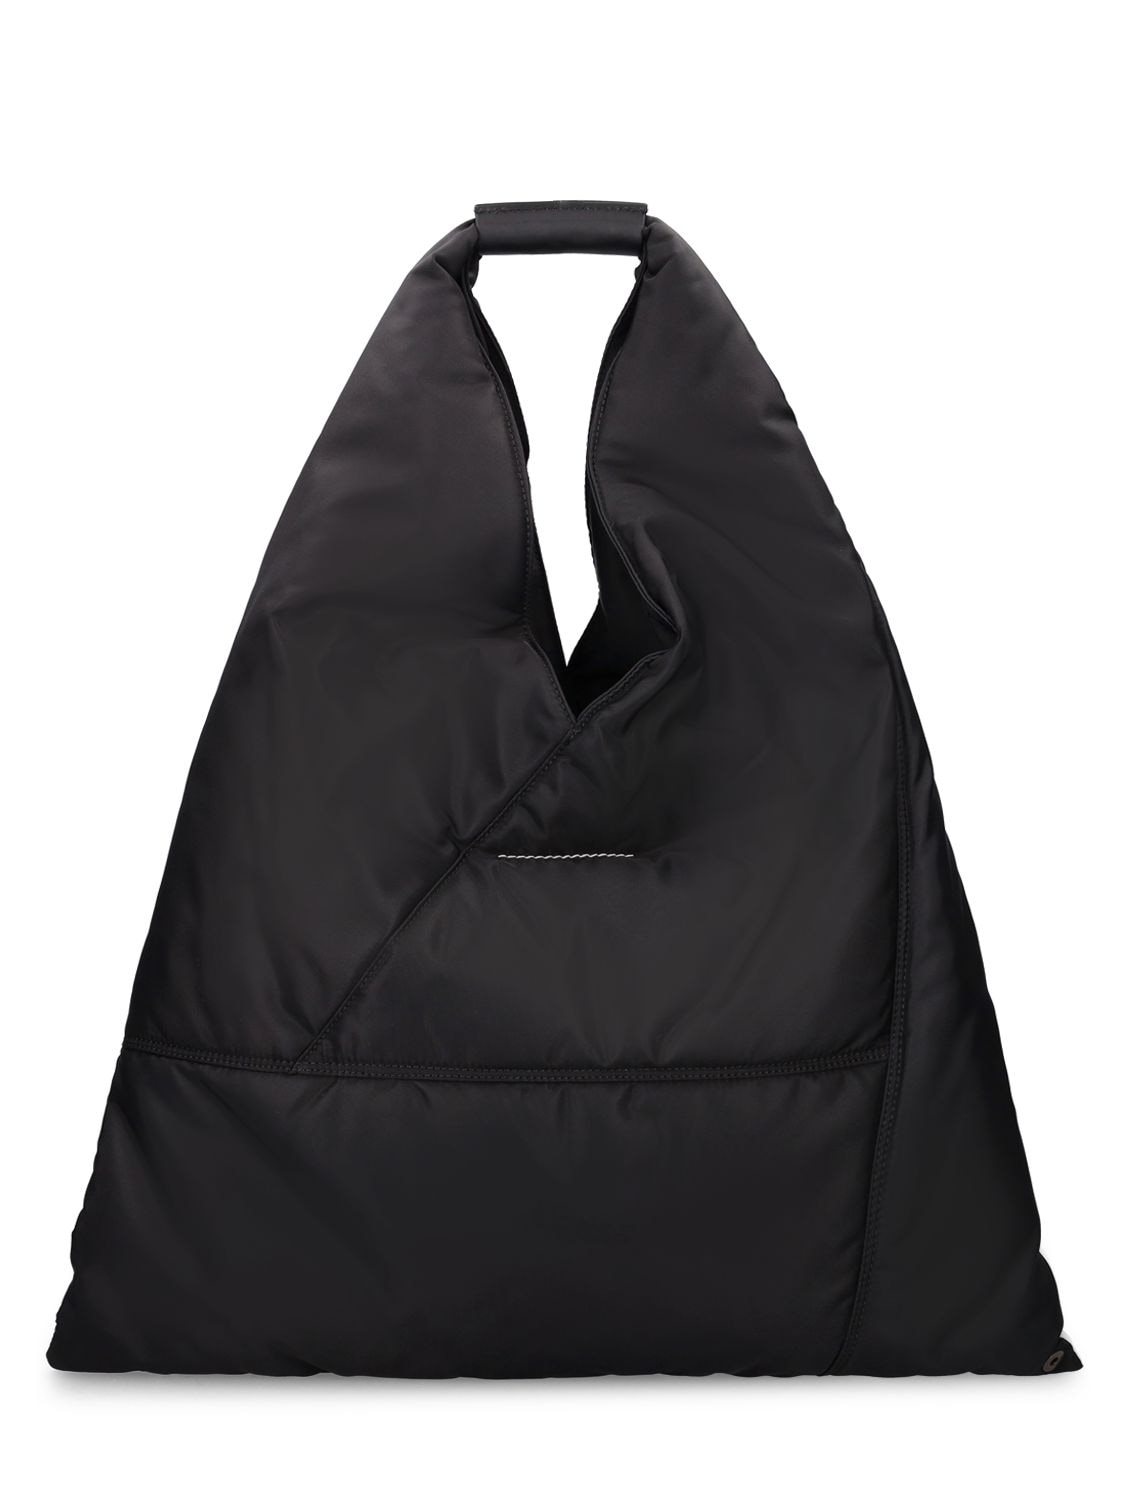 Classic Japanese Han Nylon Shoulder Bag In Black